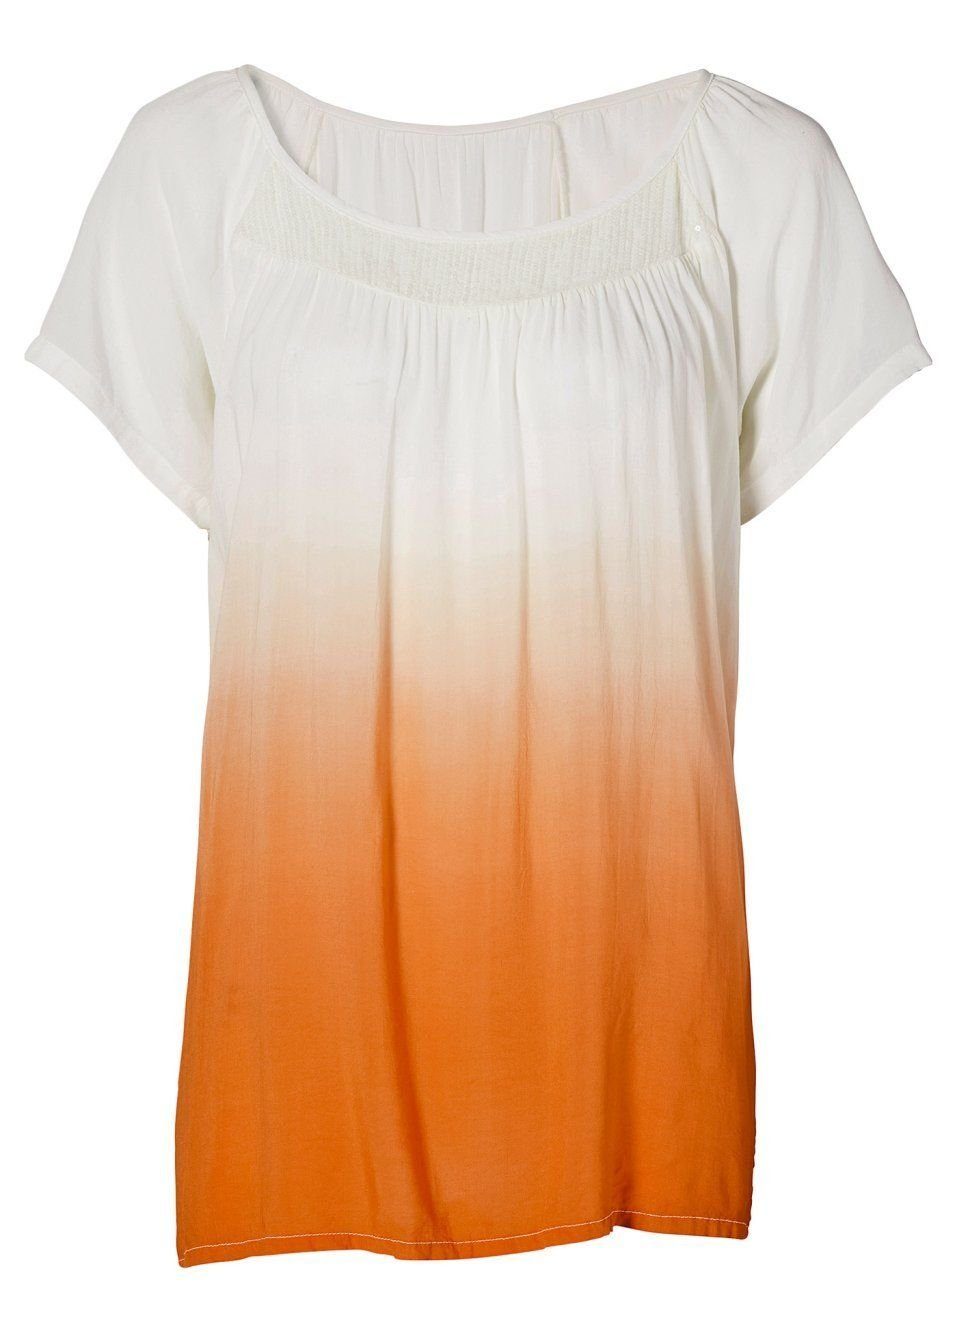 YESET kurzarm Pailletten Farbverlauf ecru Tunika orange Tunika Bluse Shirt 928589